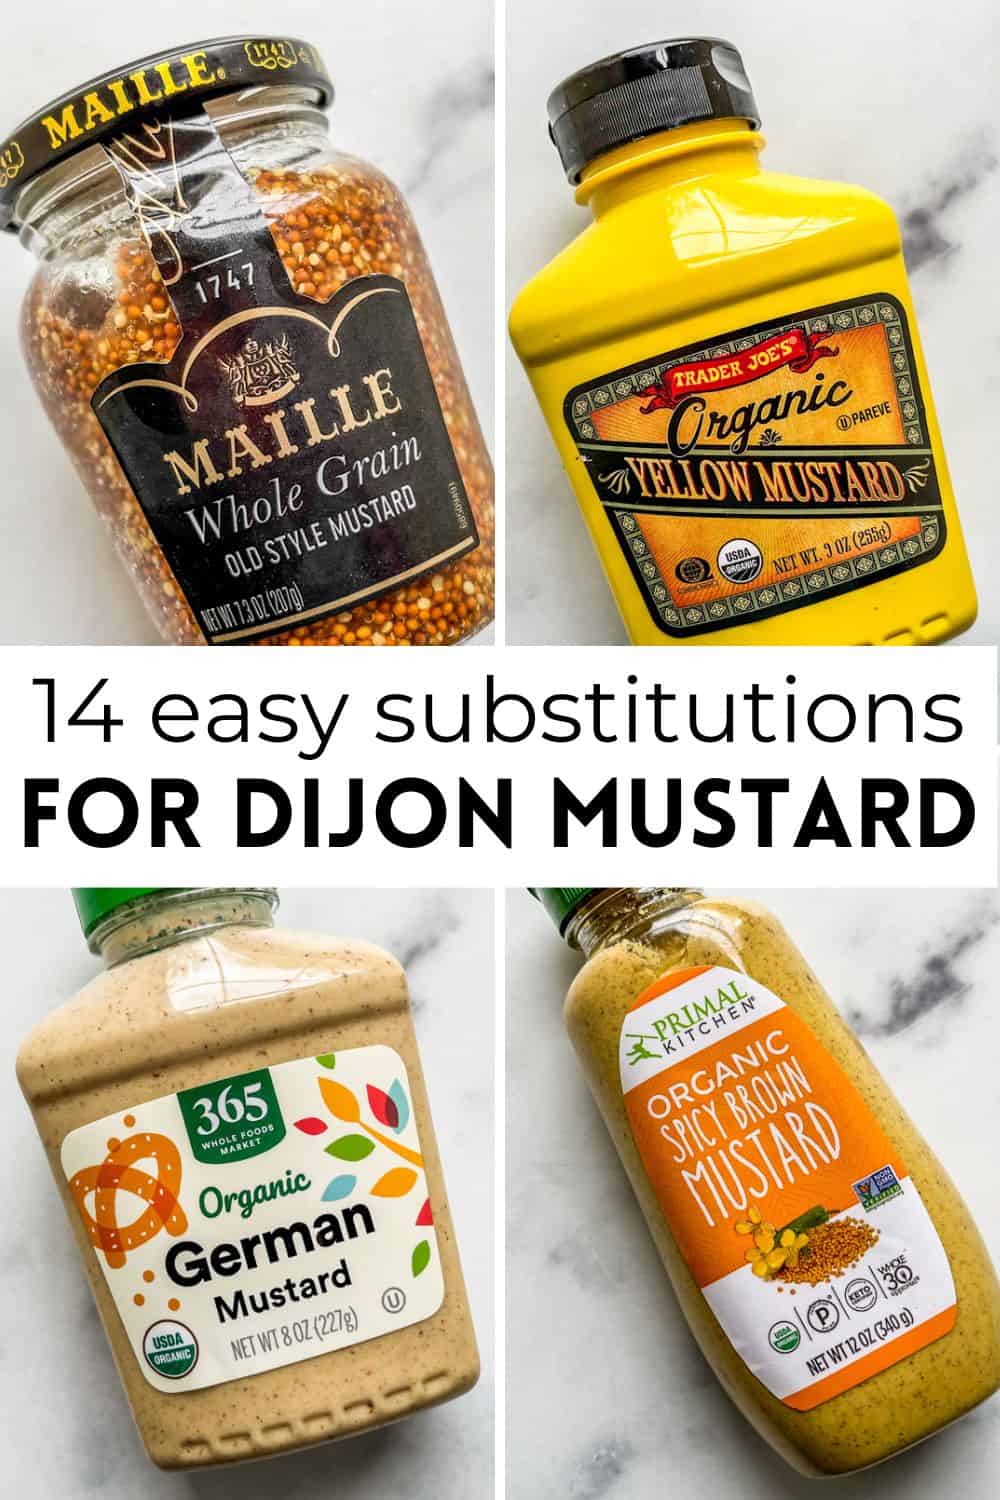 Dijon mustard substitution graphic.